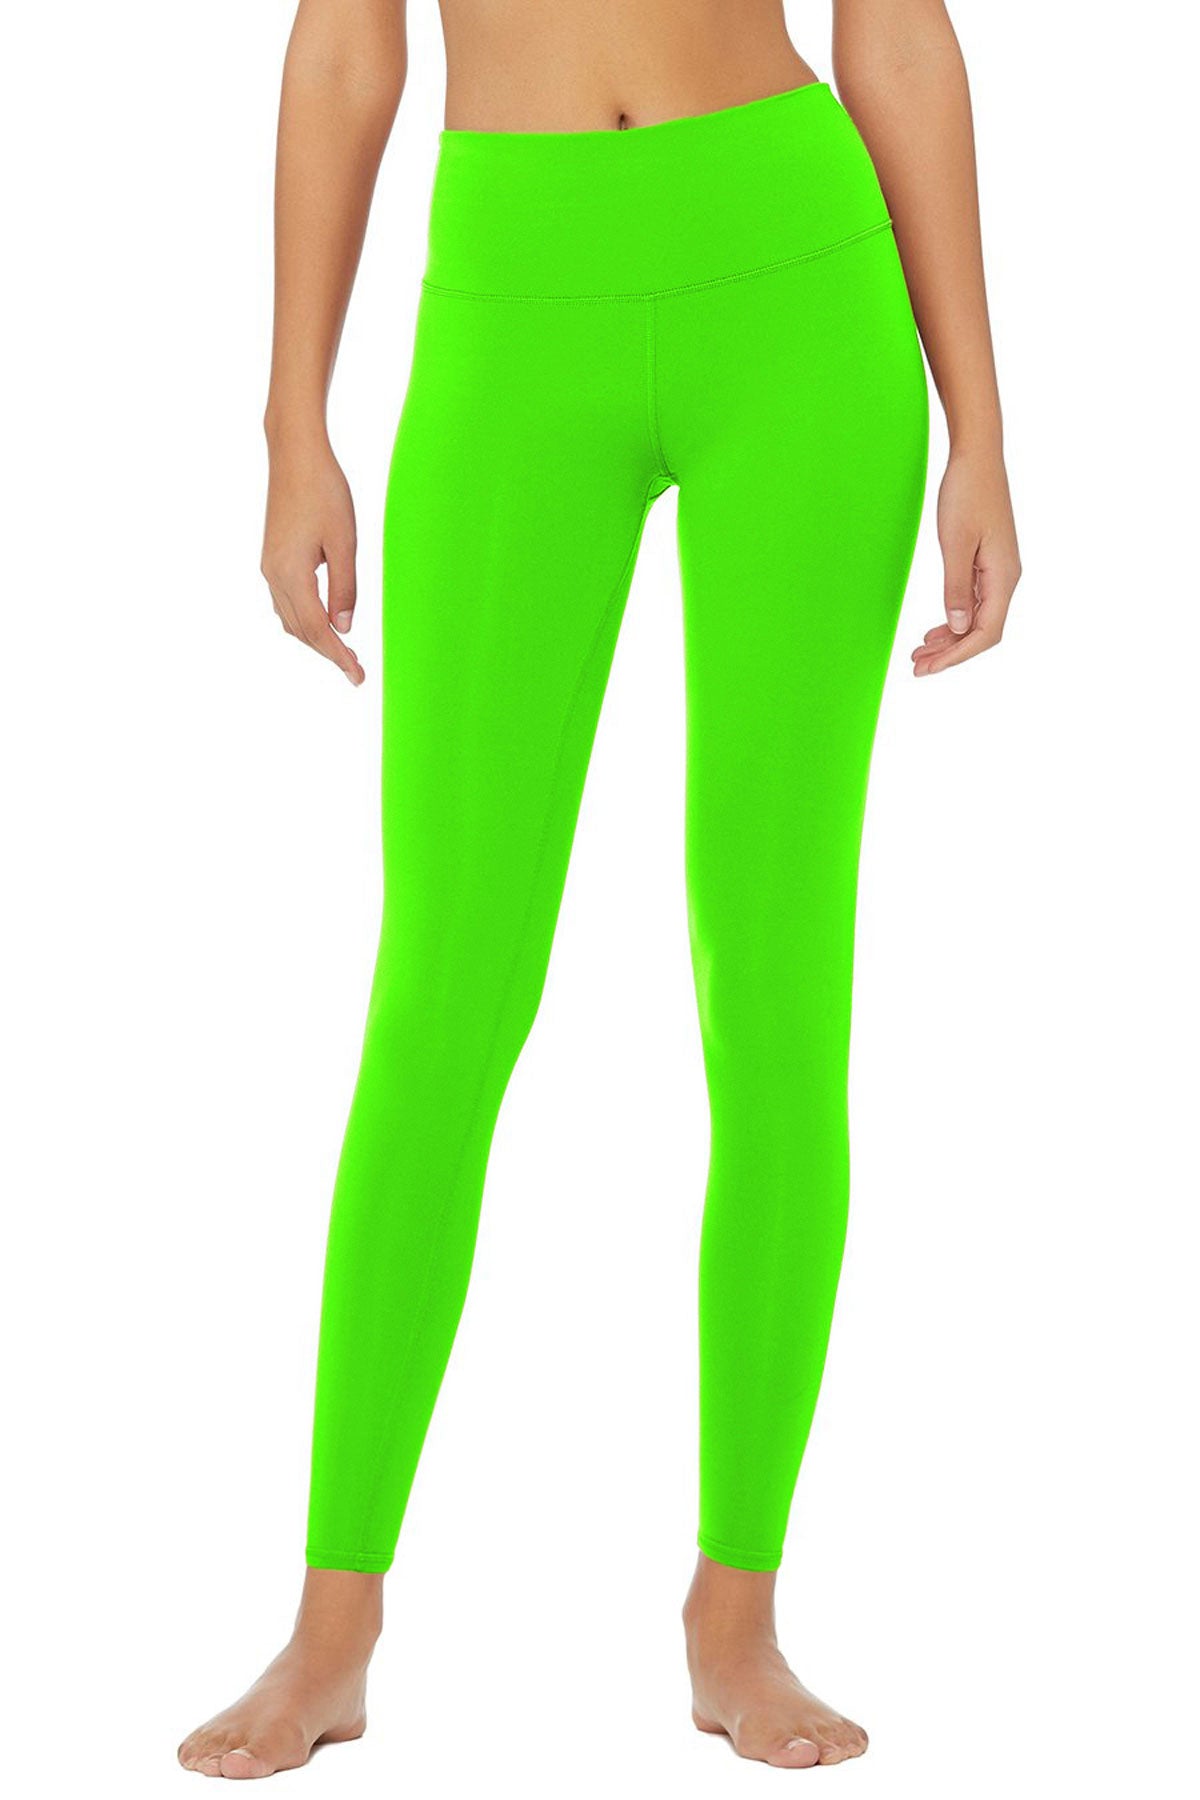 Neon Green UV 50+ Lime Lucy Performance Leggings Yoga Pants - Women - Pineapple Clothing